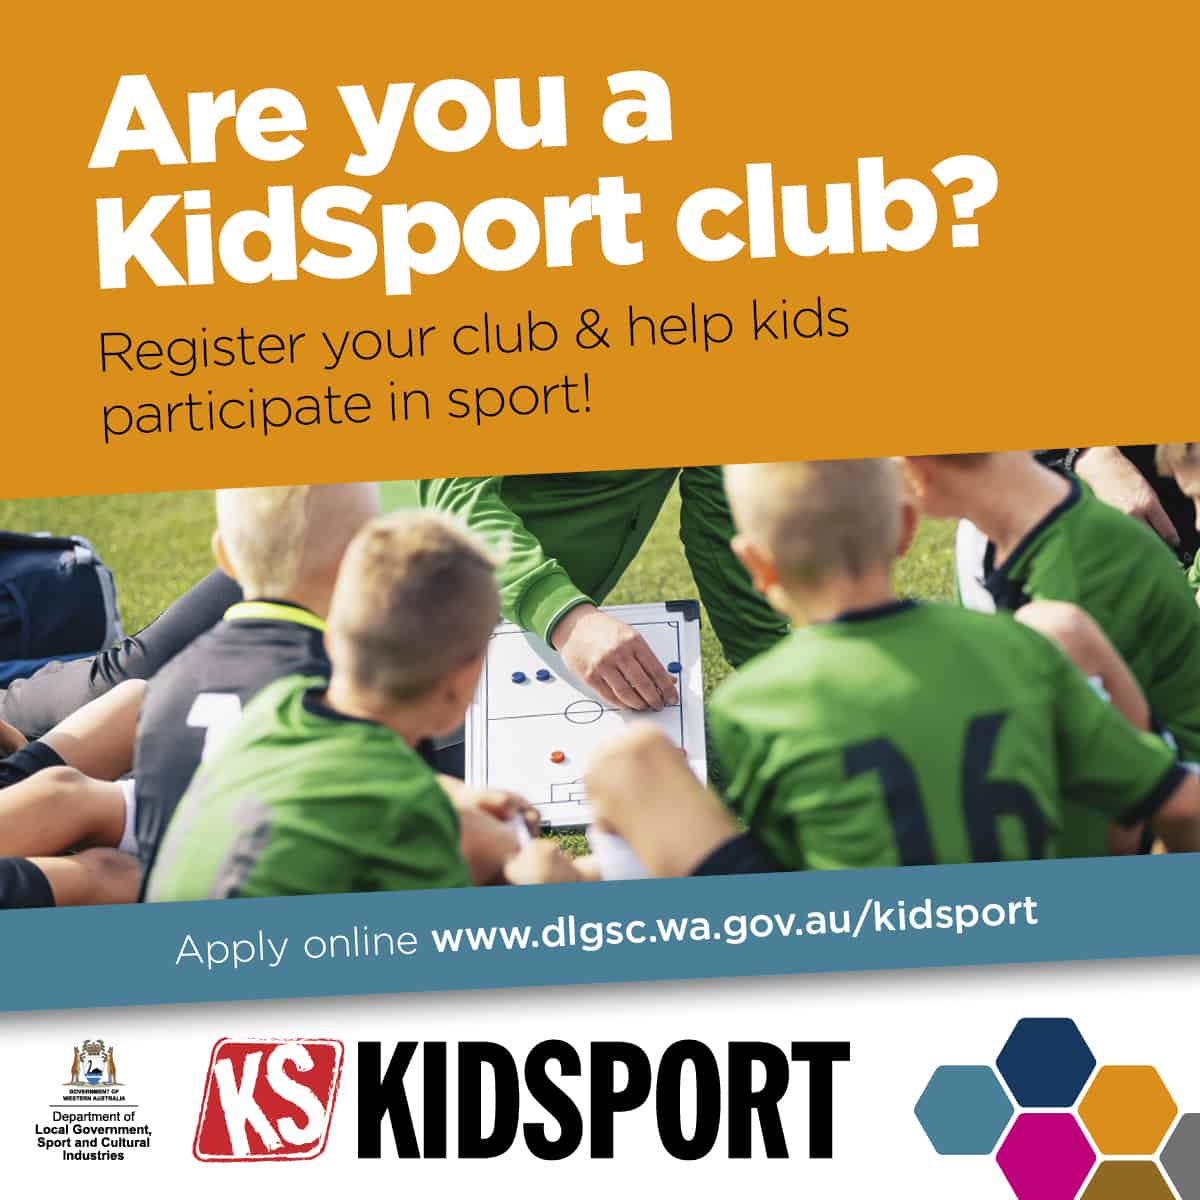 kidsport-are-you-a-kidsport-club-1200x-square (1)